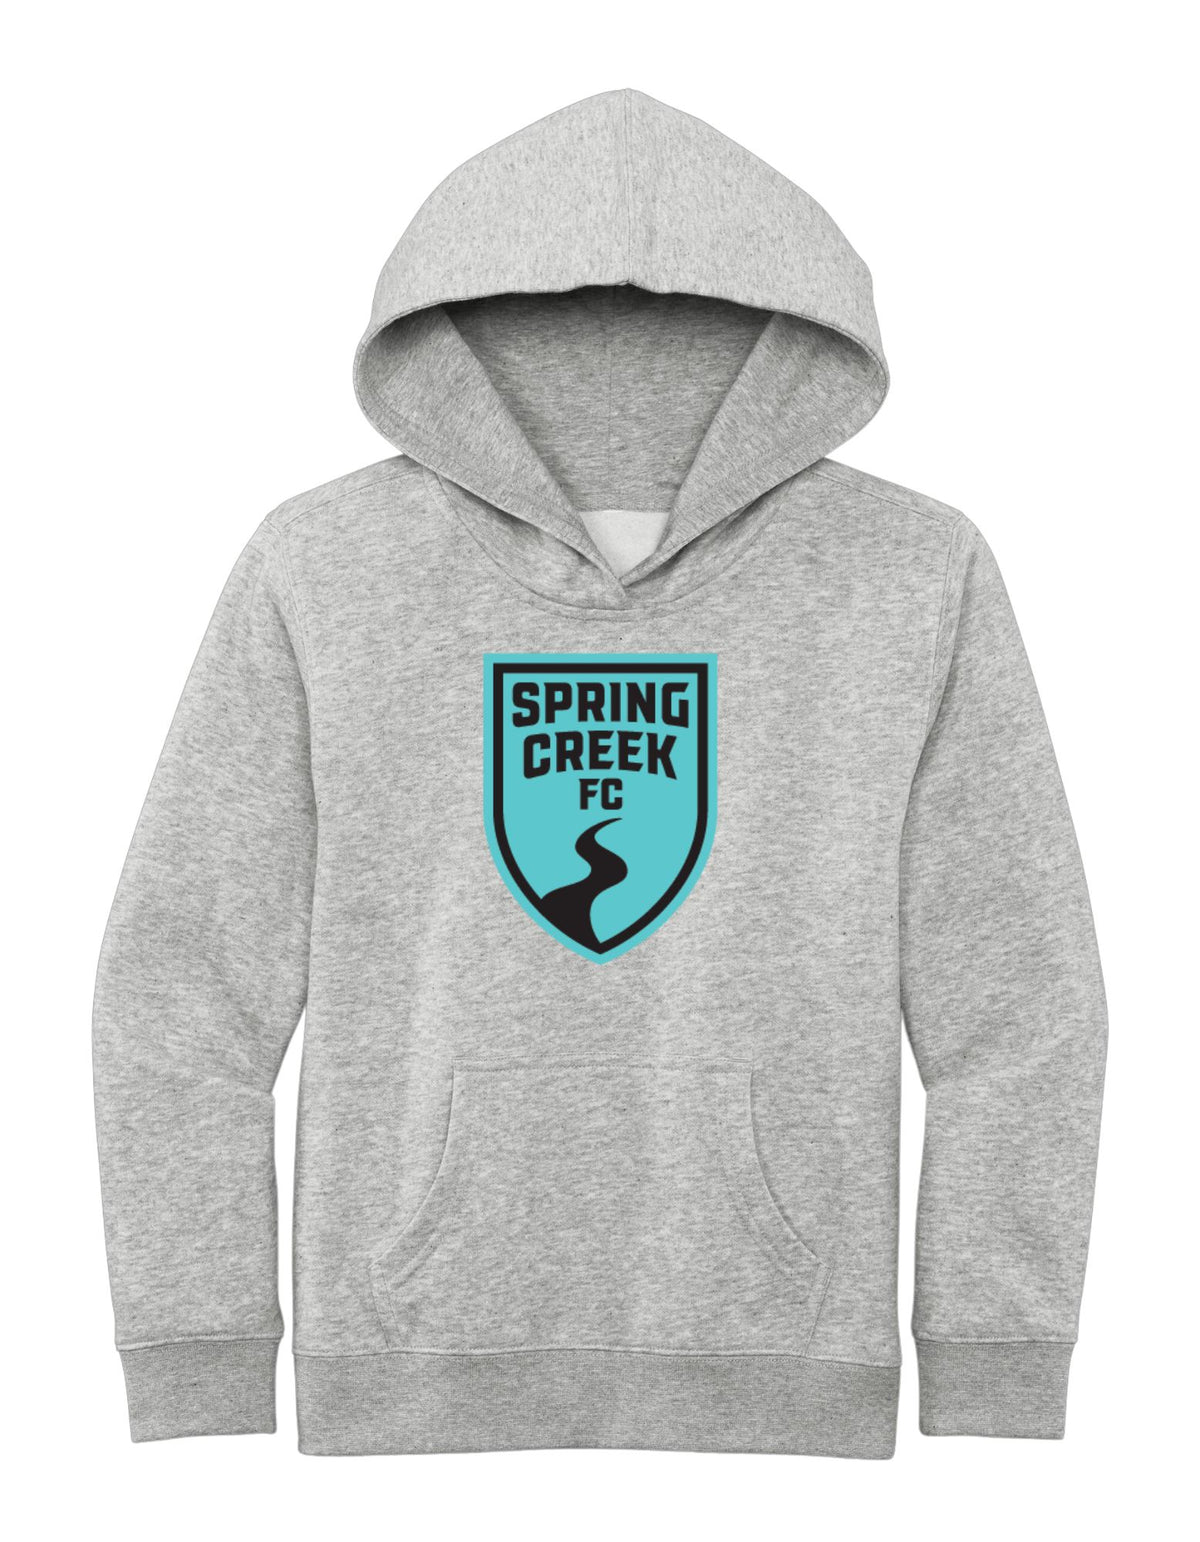 Spring Creek FC | Youth Hooded Sweatshirt Goal Kick Soccer Heathered Grey Youth Small 